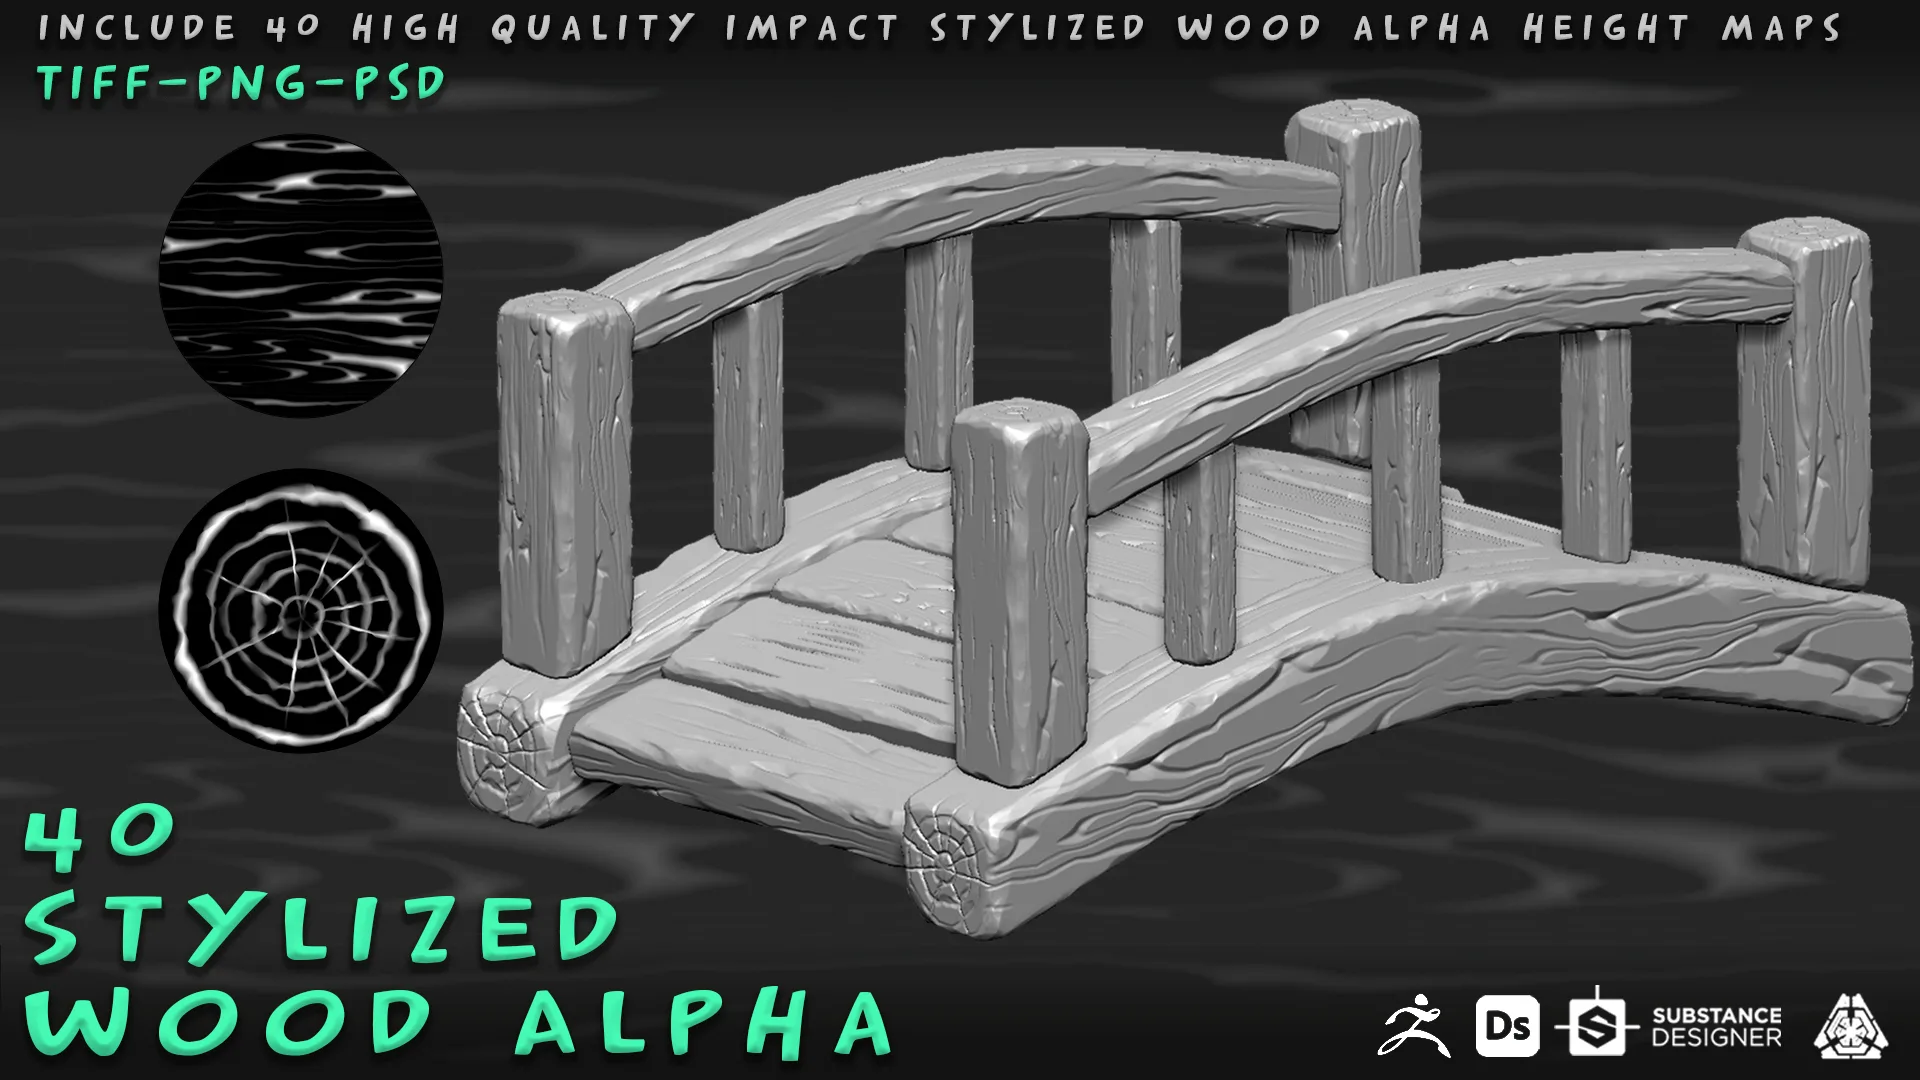 40 Stylized Wood Alpha